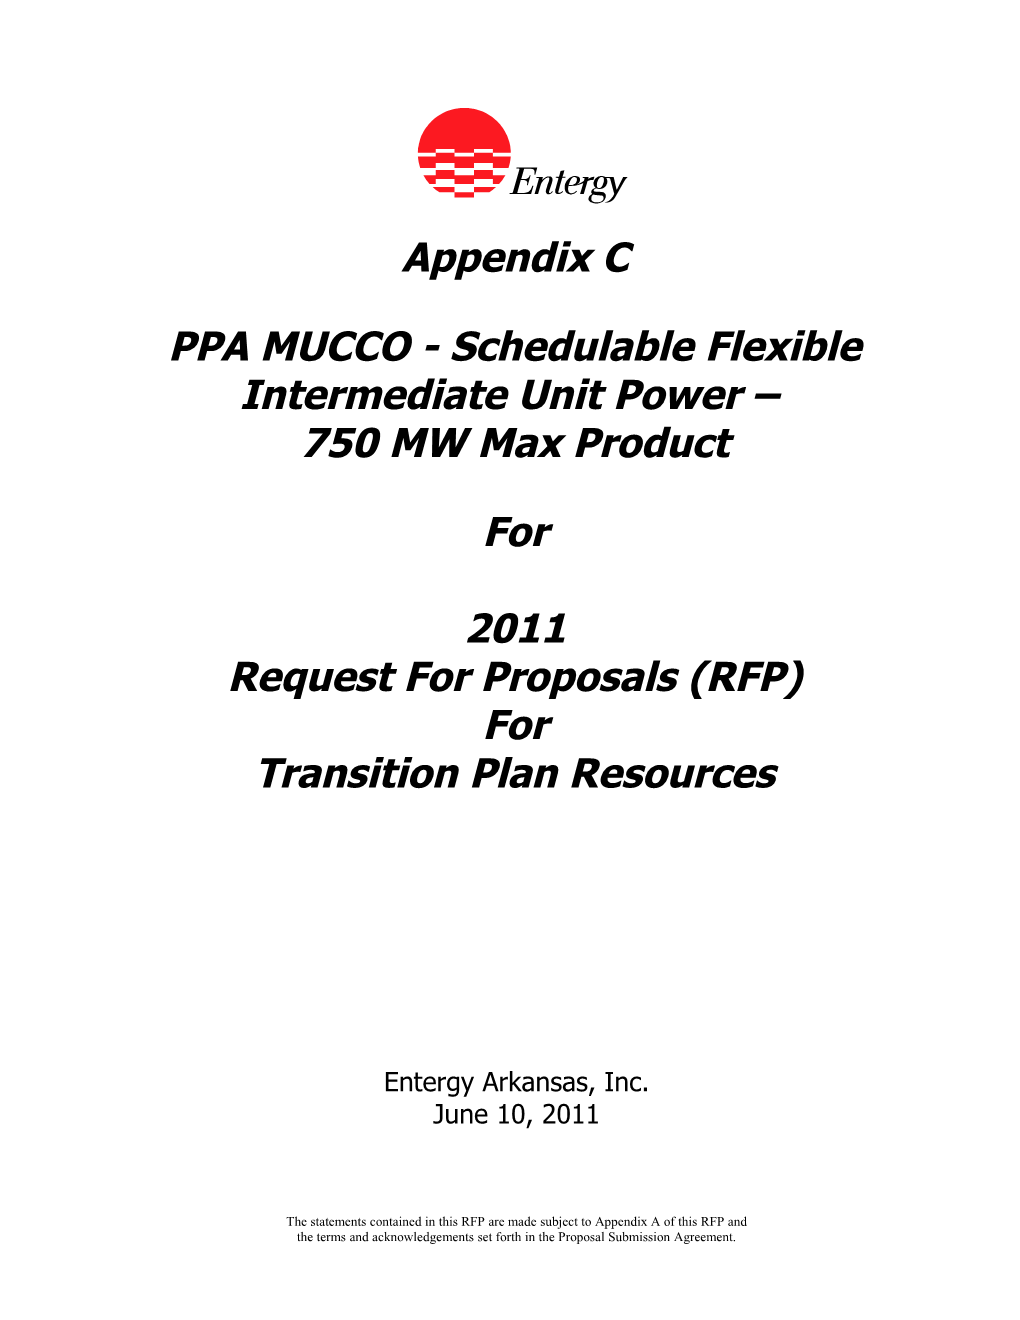 PPA MUCCO - Schedulable Flexible Intermediate Unit Power